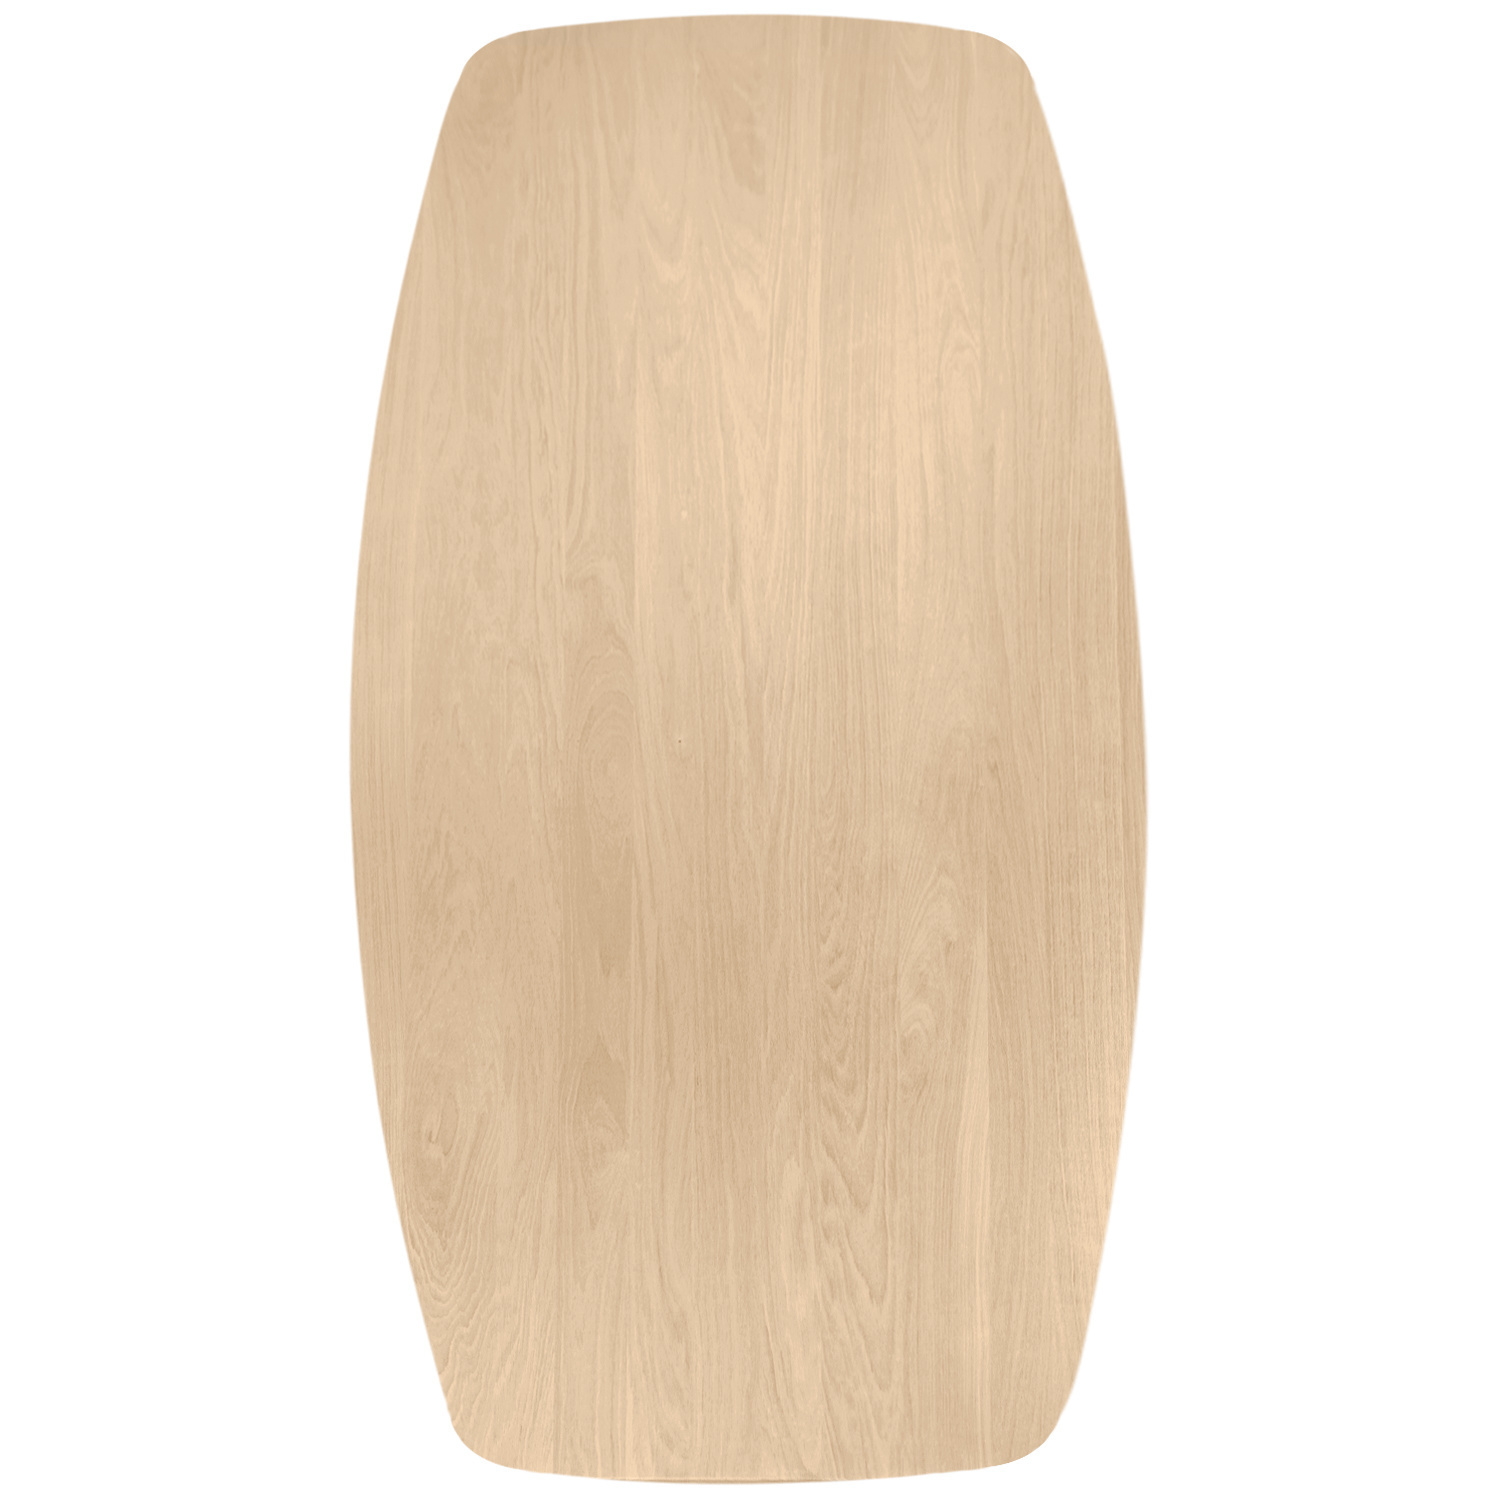  Deens ovaal eiken tafelblad - 4 cm dik (1-laag) - Diverse afmetingen - foutvrij Europees eikenhout - met brede lamellen (circa 10-12 cm) - verlijmd kd 8-12%